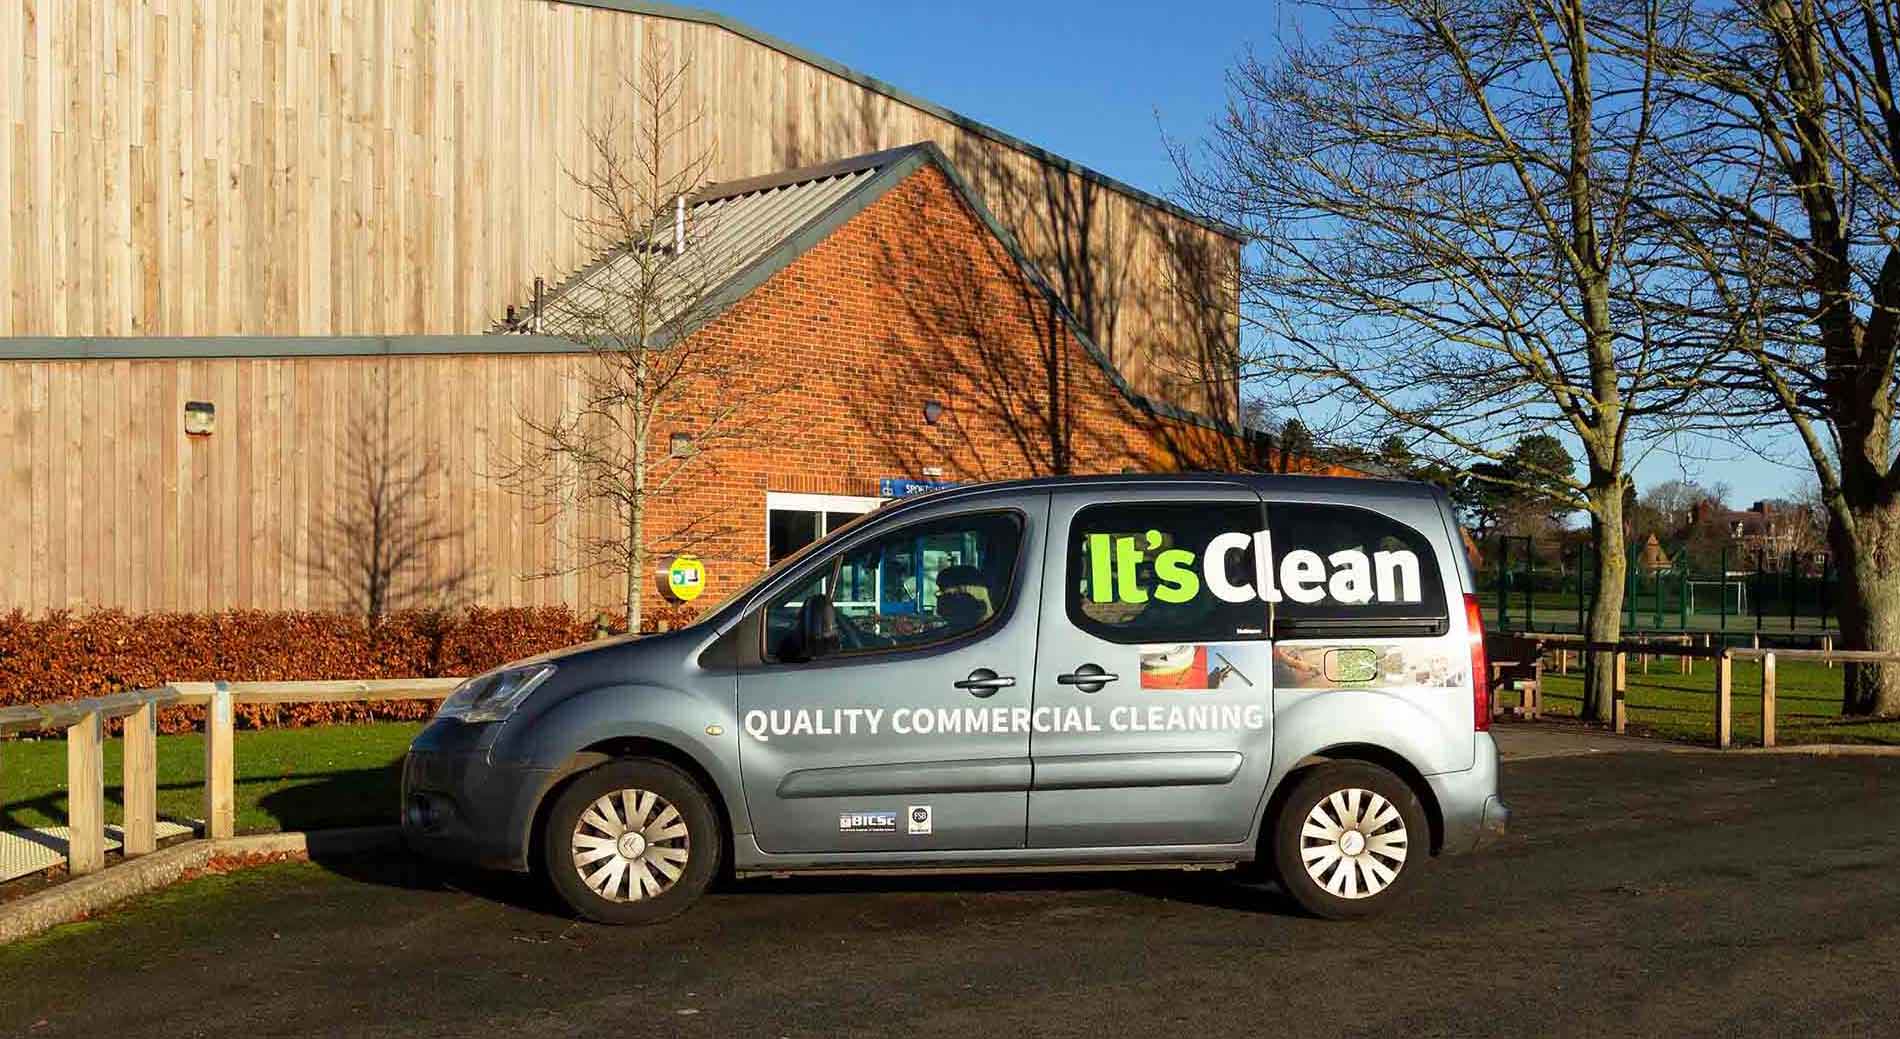 It's Clean van outside a school sports hall in Ripon